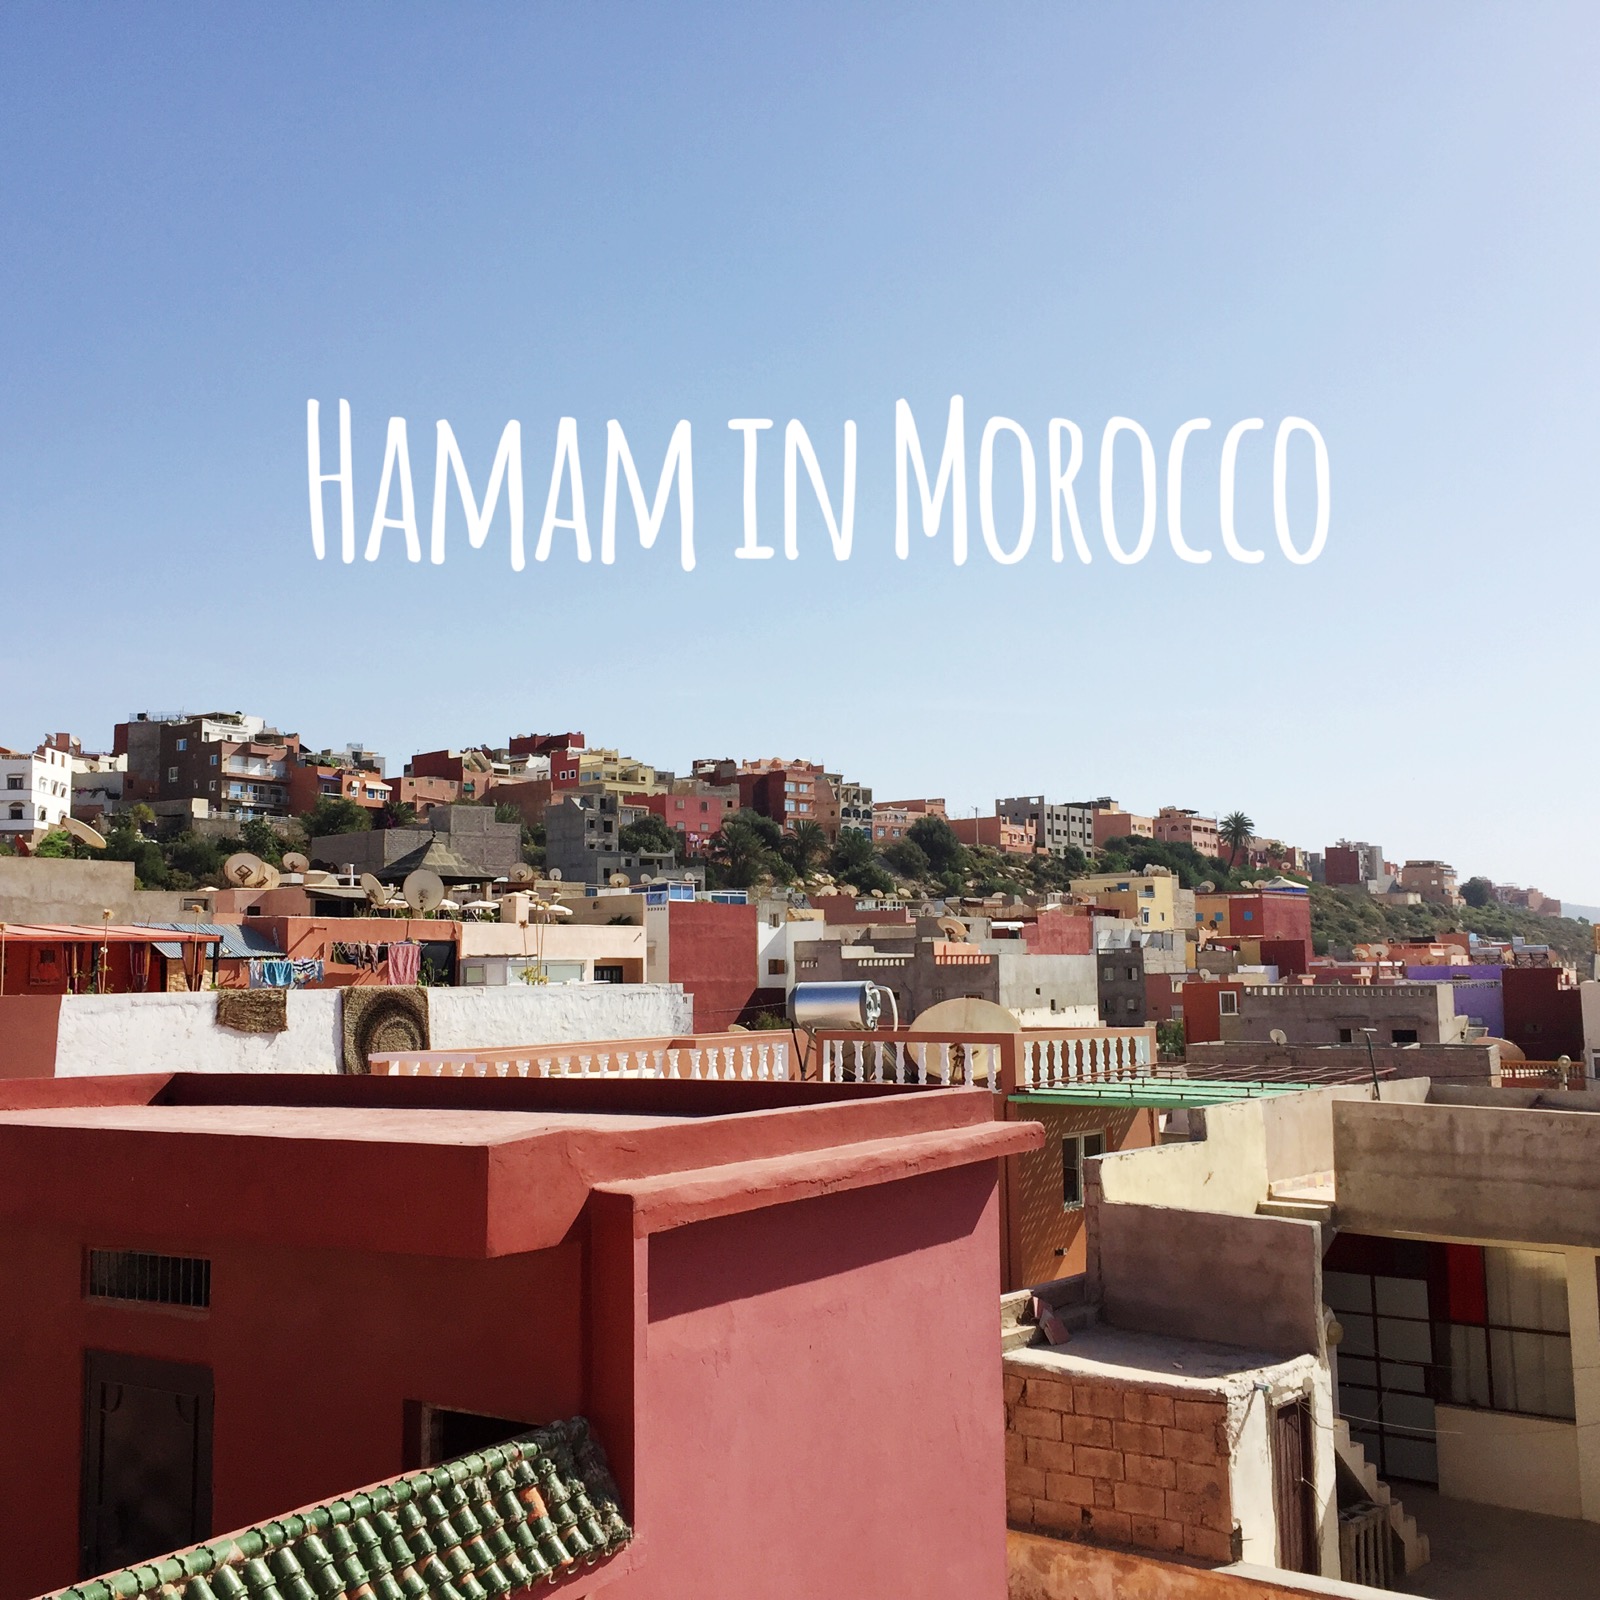 Moroccan hamam